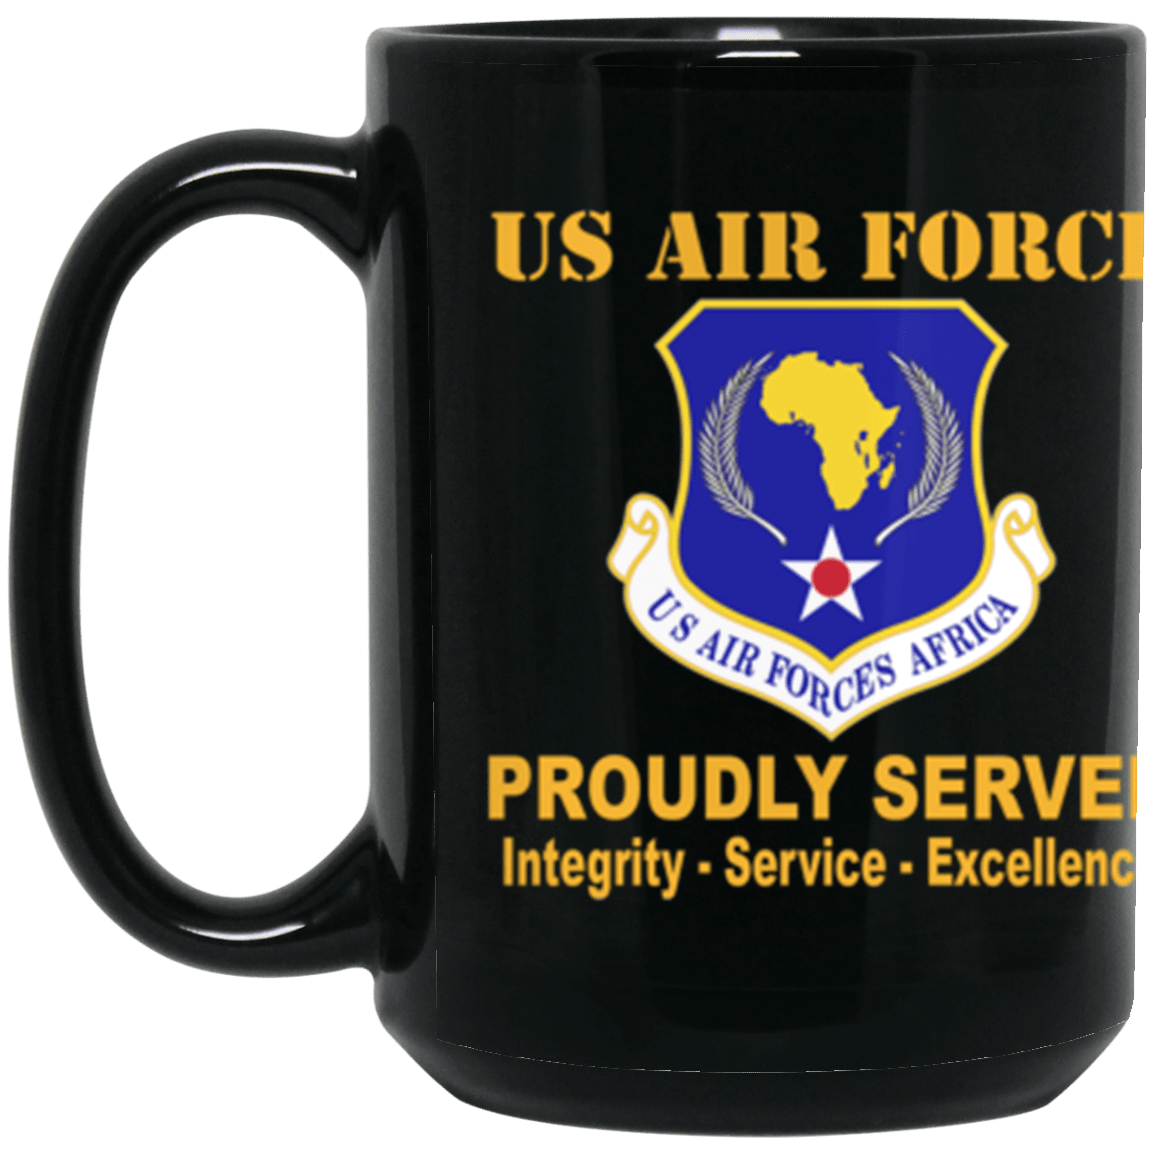 US Air Force Communications Command Proudly Served Core Values 15 oz. Black Mug-Mug-USAF-Veterans Nation